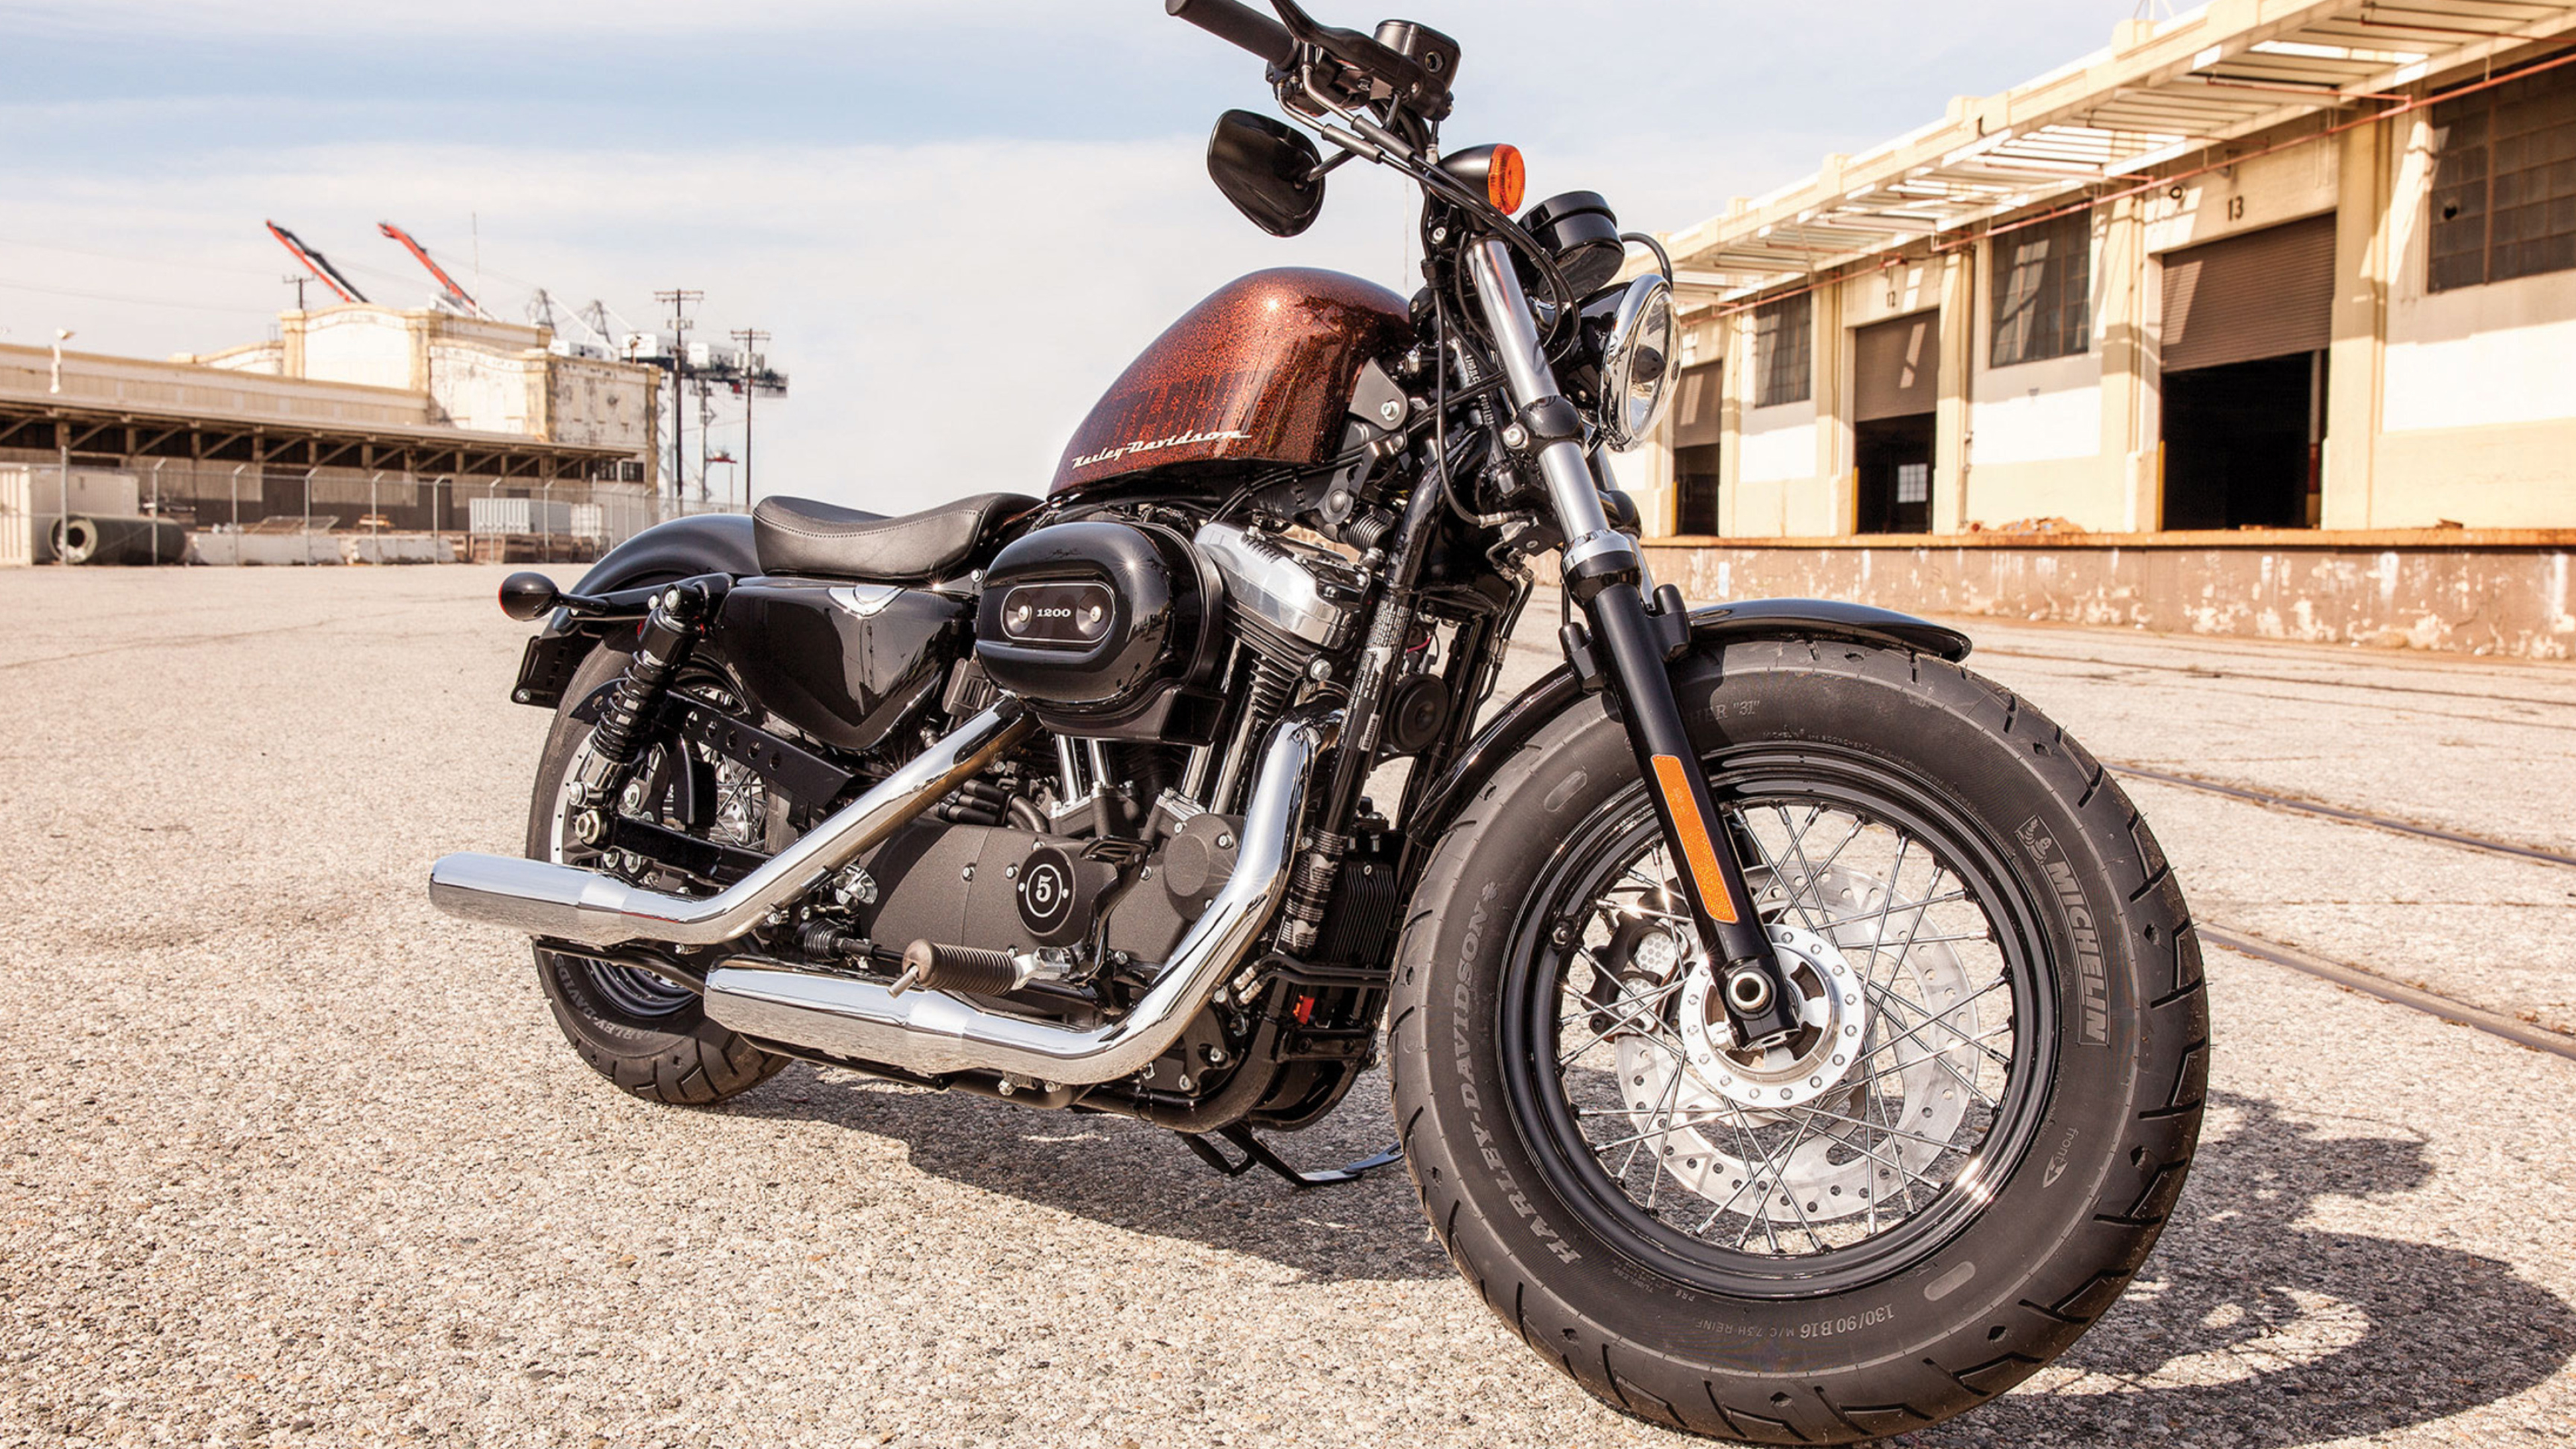 Harley Sportster Motorcycle, 4K Ultra HD wallpapers, 3840x2160 4K Desktop